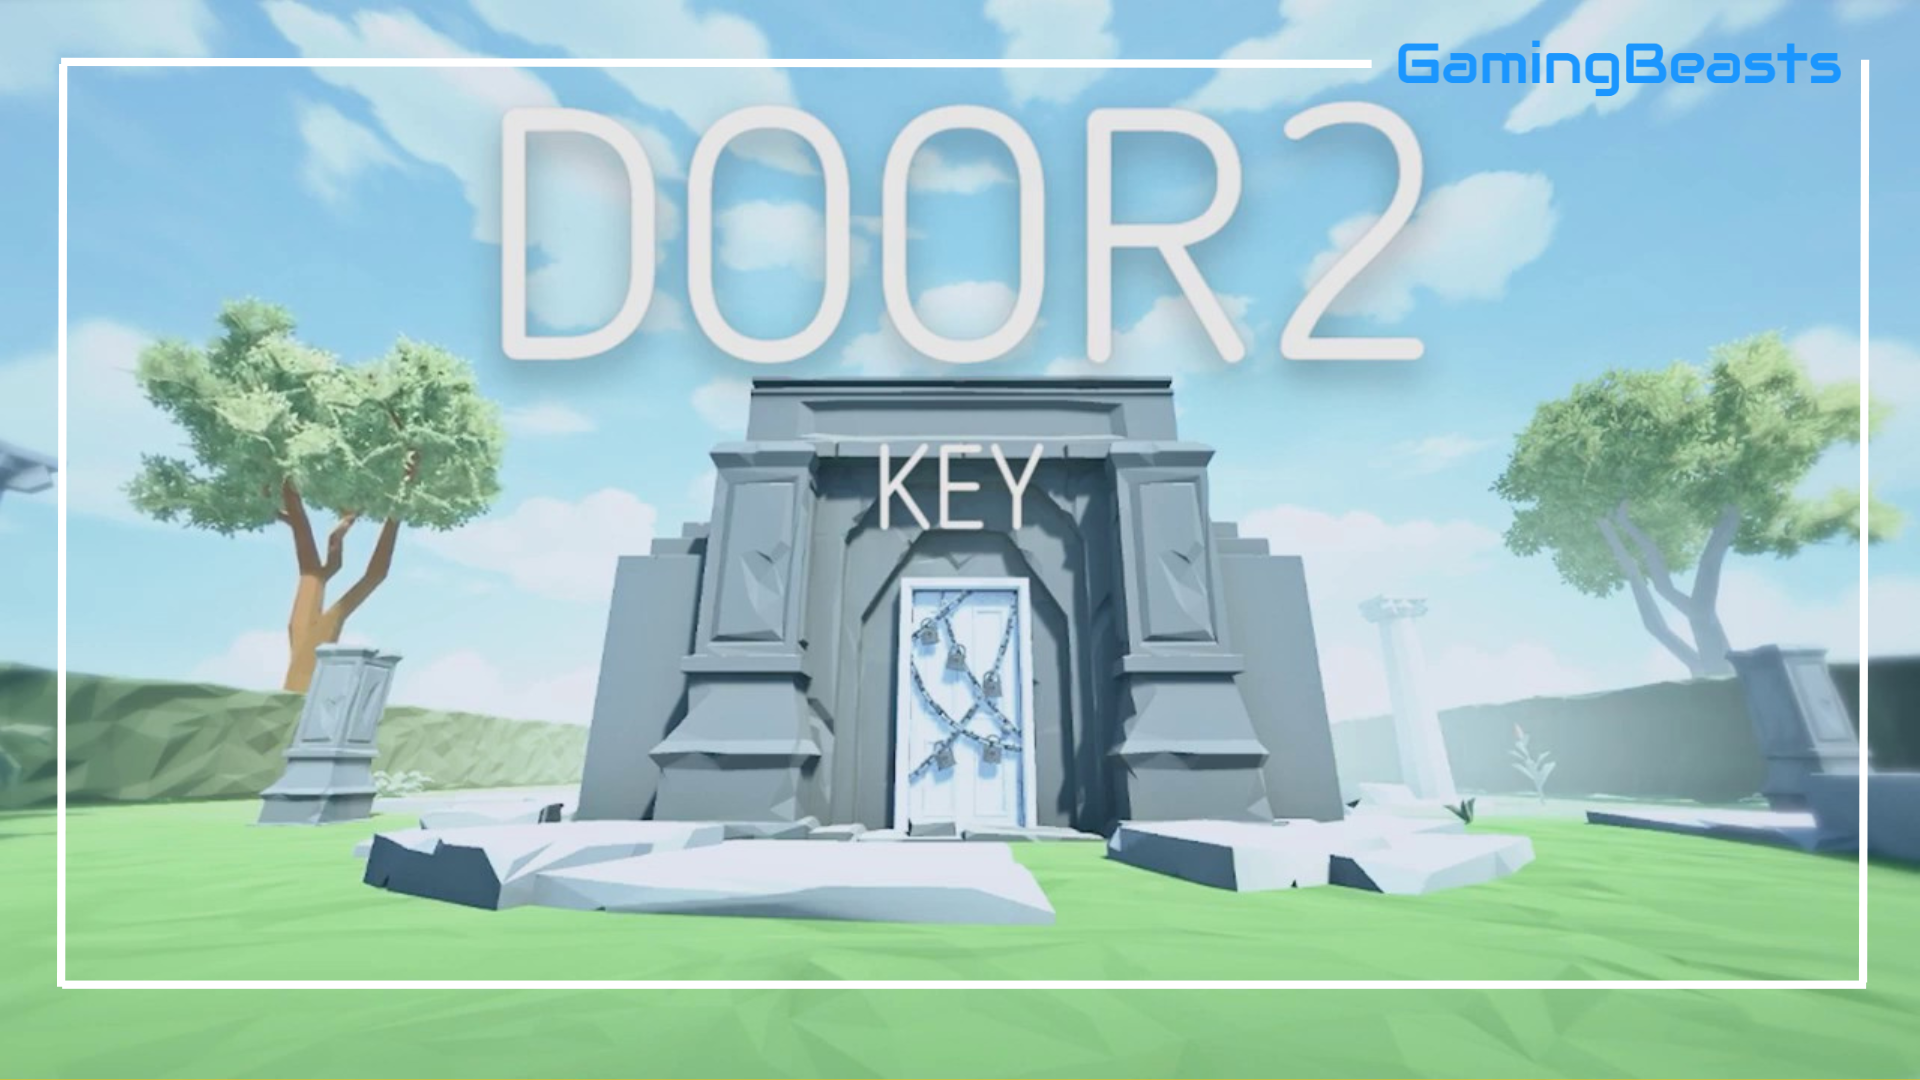 Key 2 game. Door 2 Key. Doors игра. Дорс 2 игра. Key игра.